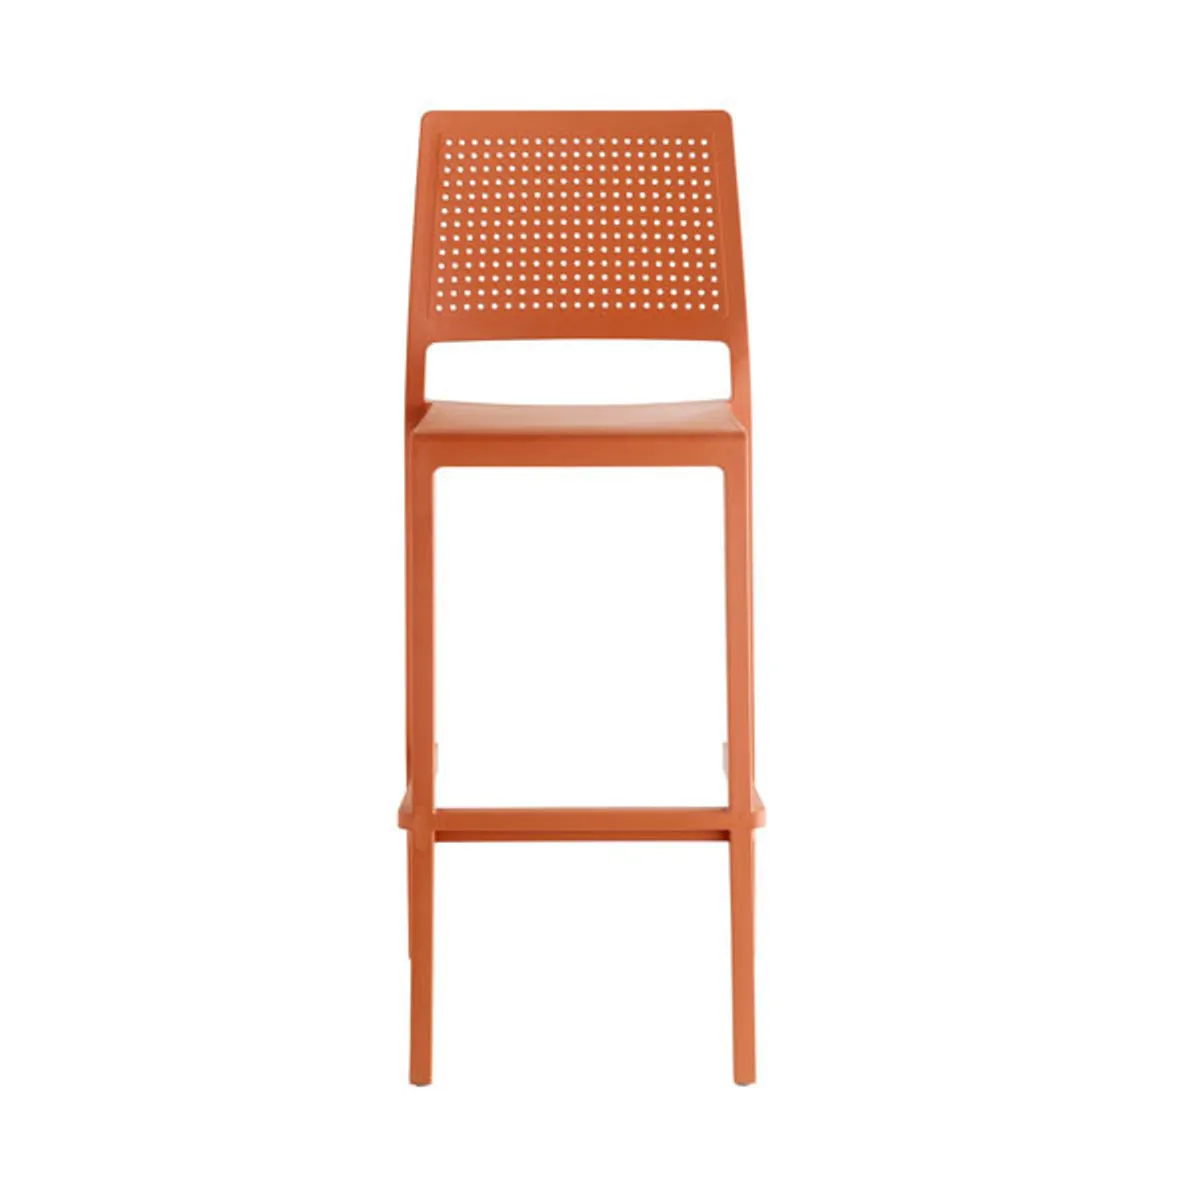 Remi dot bar stool 2345 3